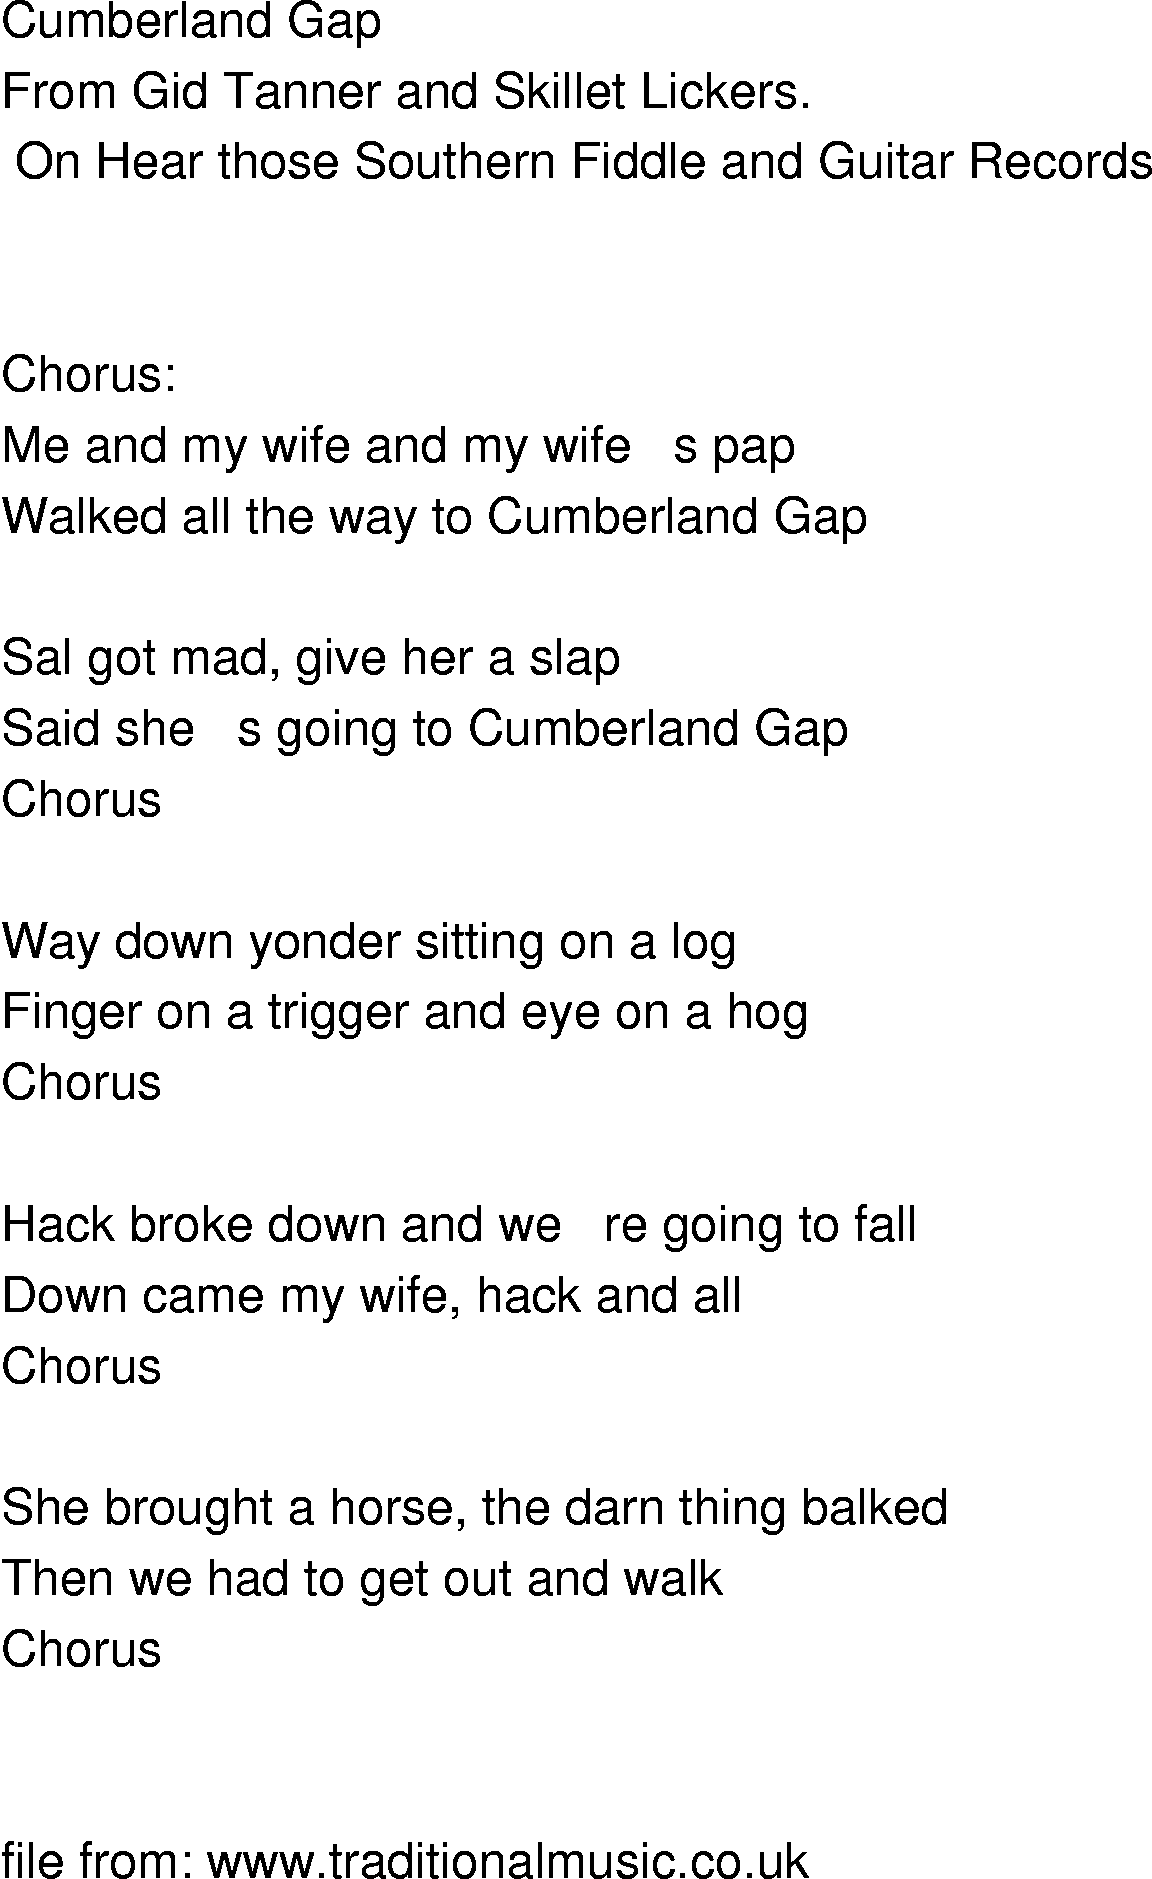 Old-Time (oldtimey) Song Lyrics - cumberland gap